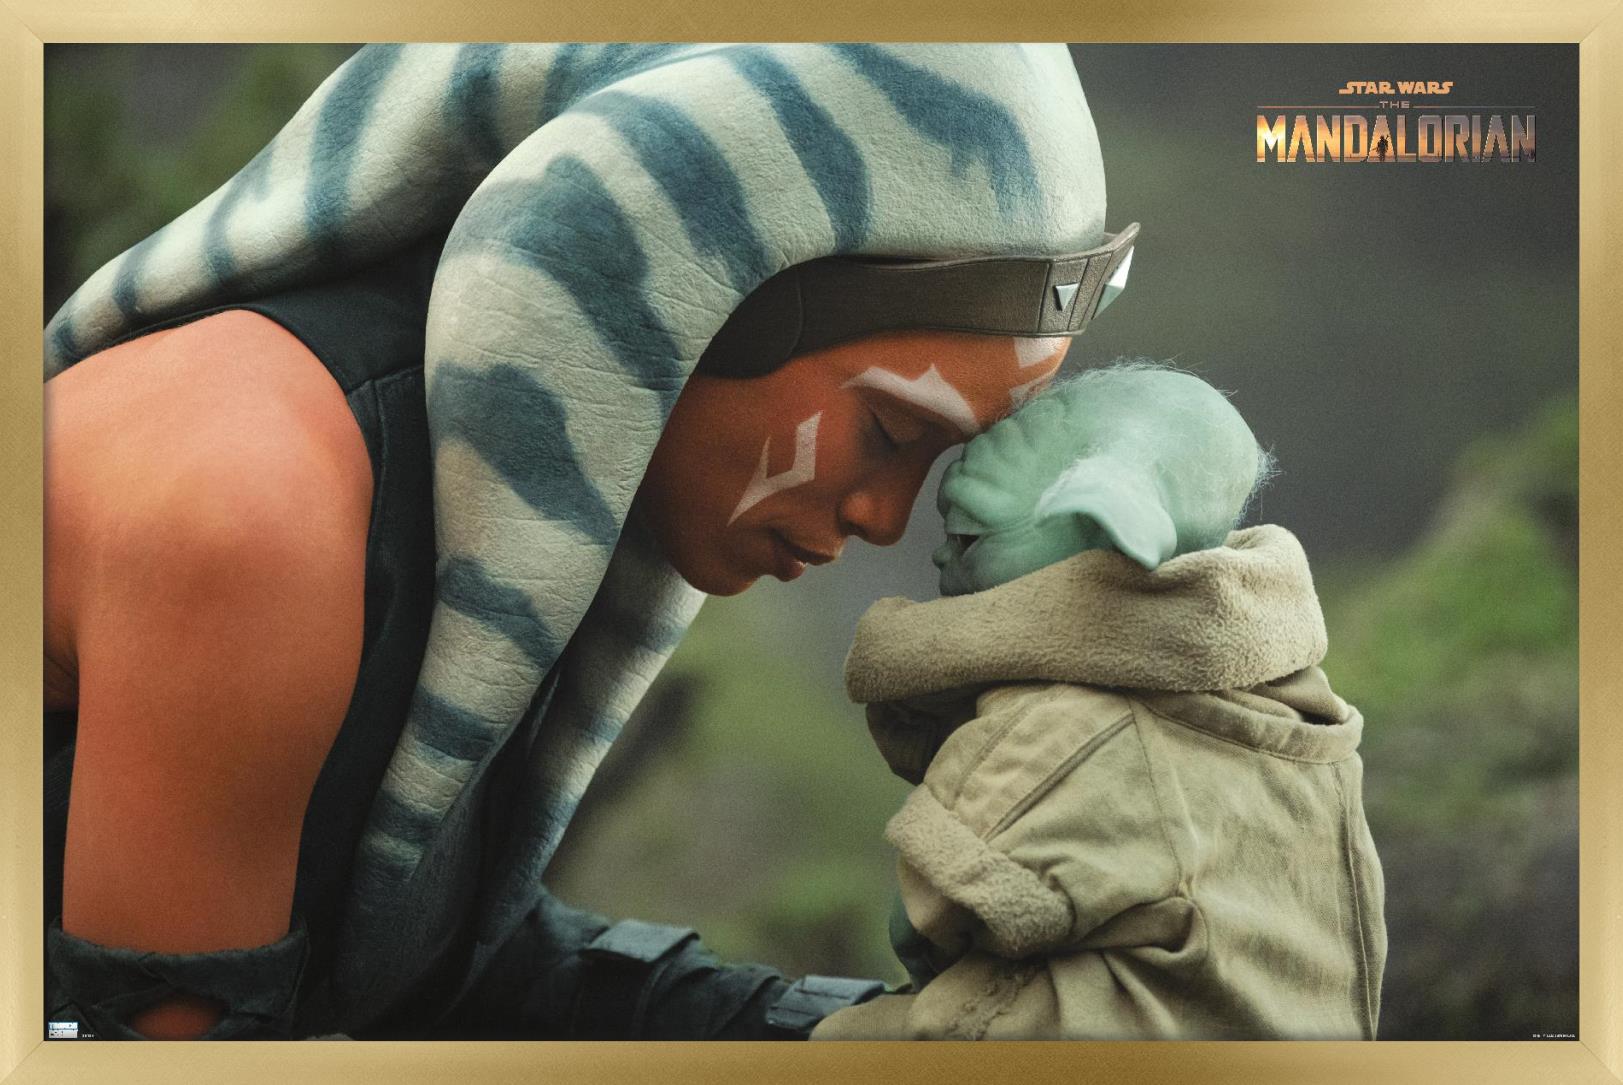 Star Wars The Mandalorian Season 2 - Moment Wall Poster, 22.375" x 34", Framed - image 1 of 5